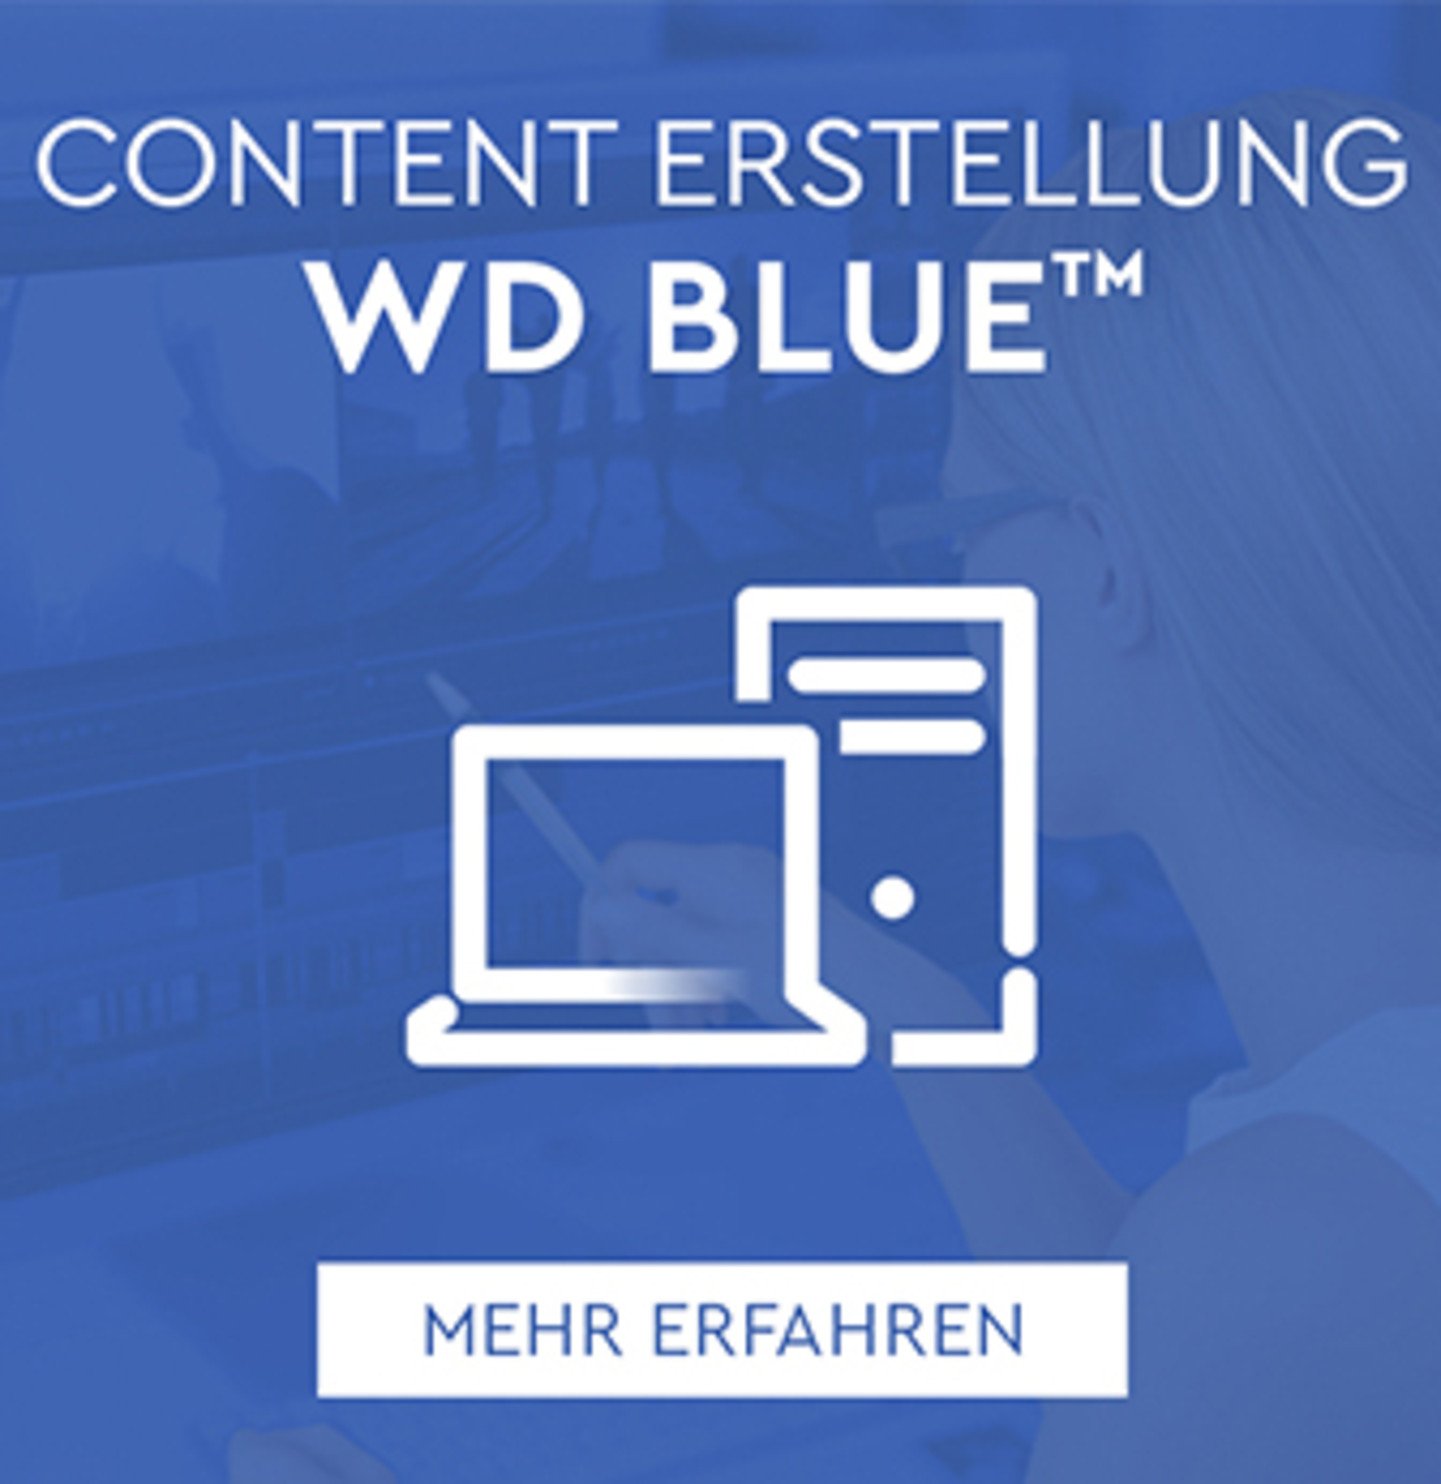 Content Erstellung – WD BLUE